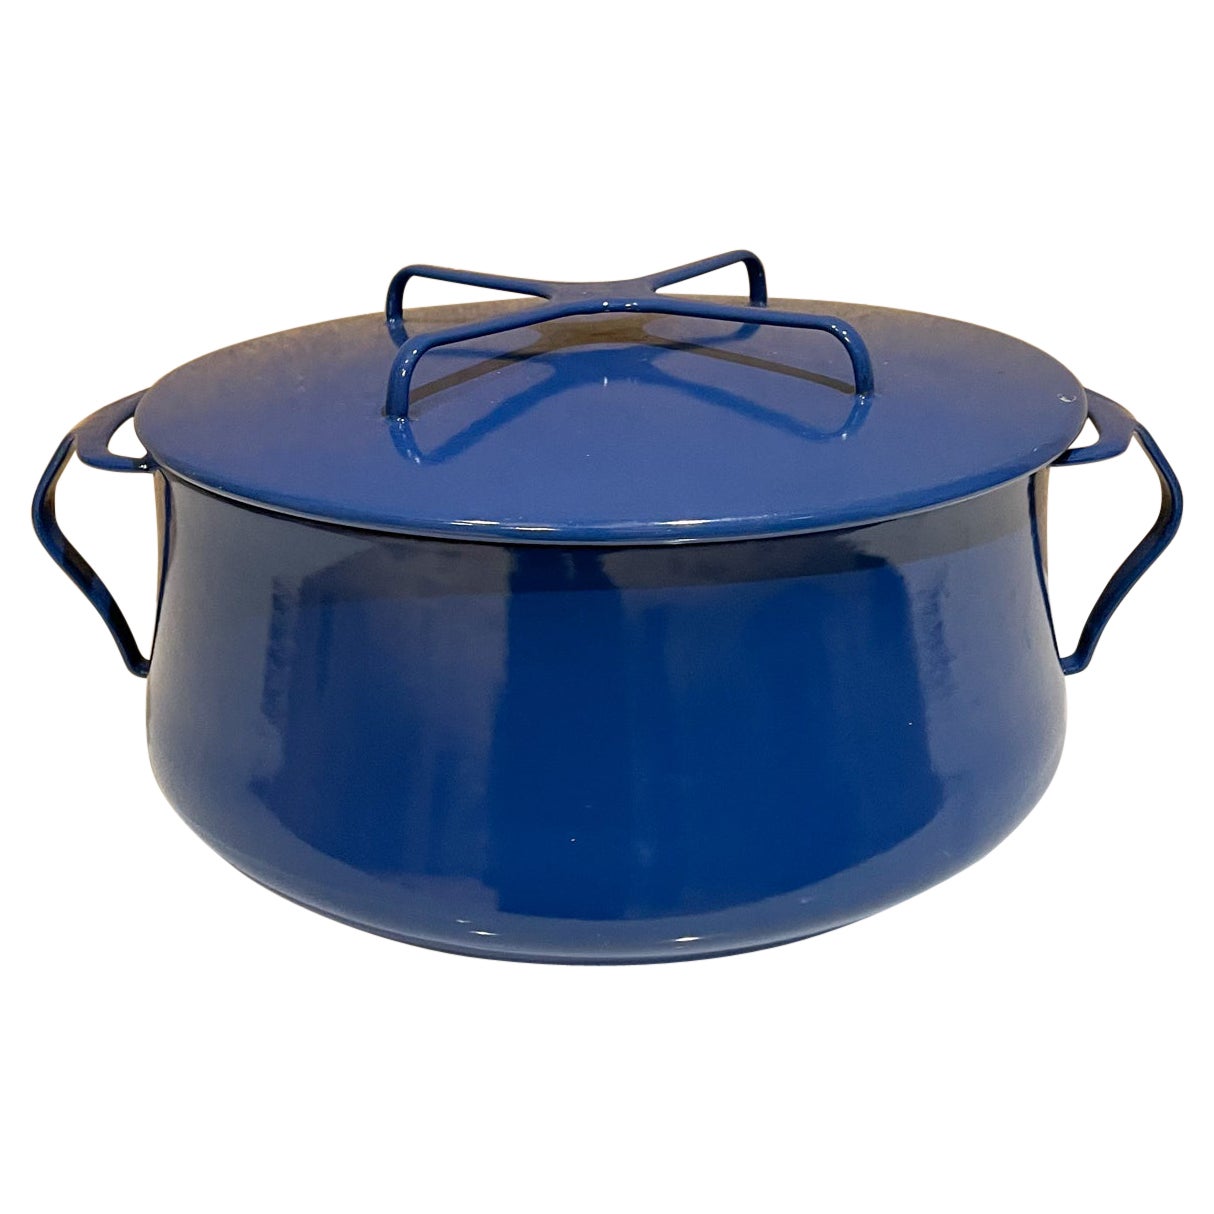 Dansk Designs Blue Enamelware Casserole Pot with Trivet Top IHQ France